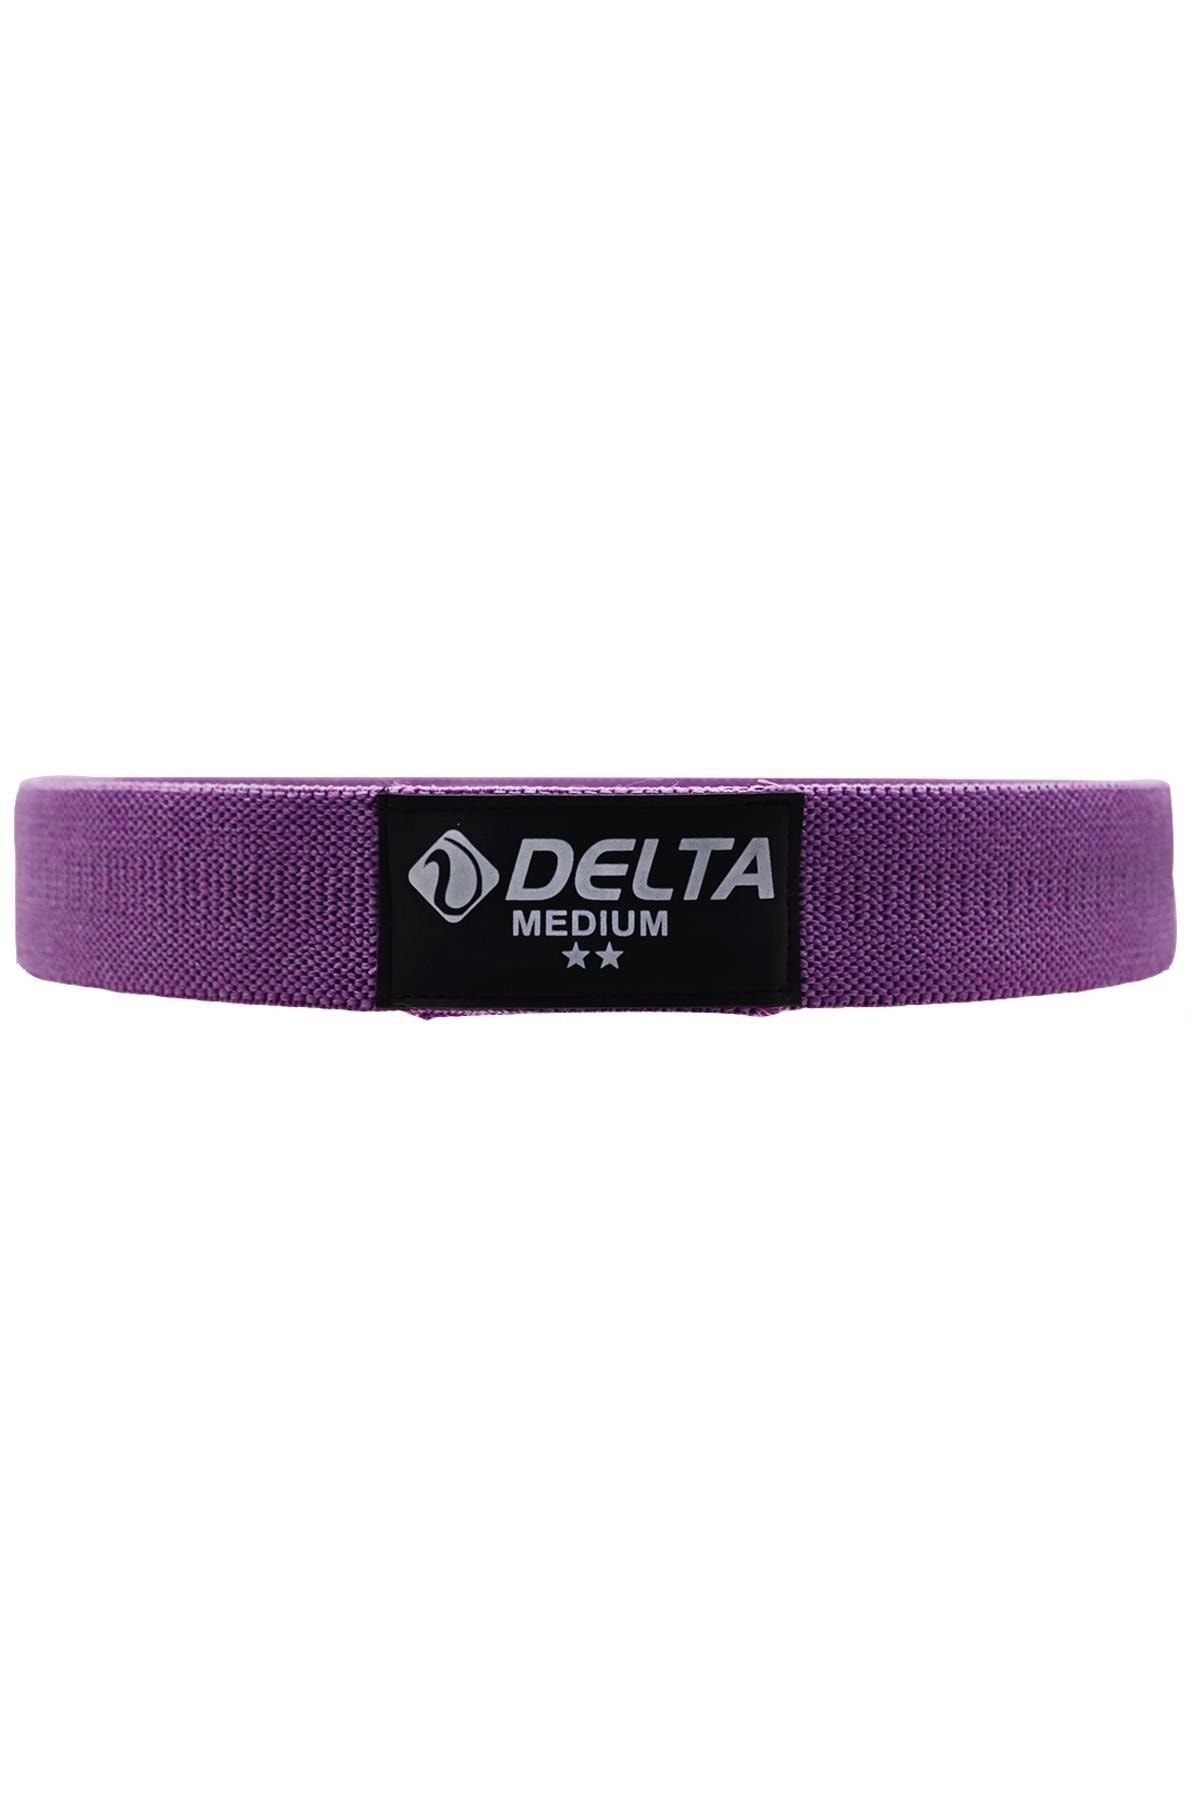 Delta Orta Sert Squat Bant Pilates Fitness Kalça Egzersizi Direnç Bandı Lastiği (Uç Kısmı Kapalı)